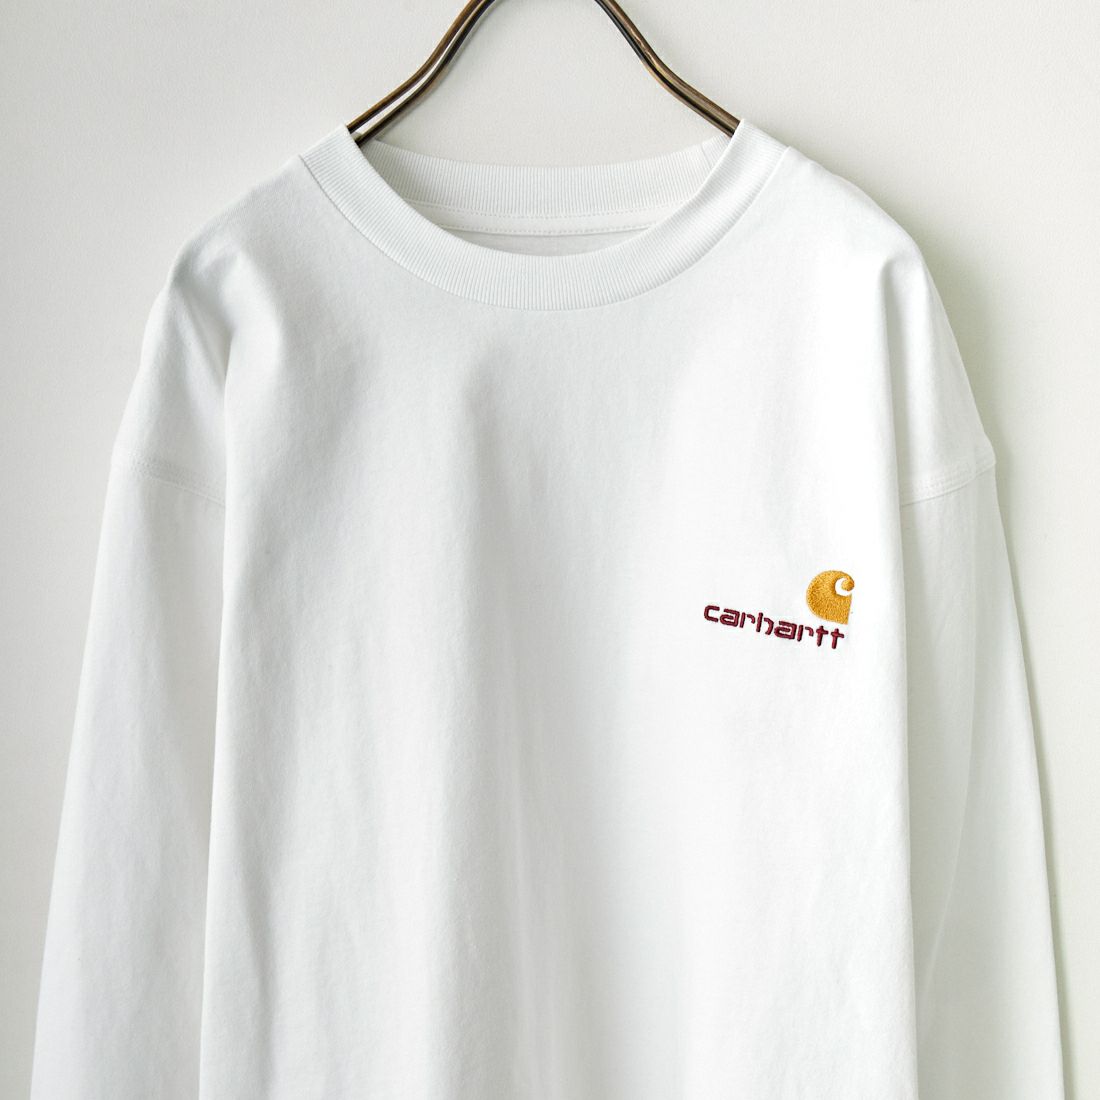 carhartt WIP [カーハートダブリューアイピー] ロングスリーブアメリカンスクリプトTシャツ [I029955] WHITE